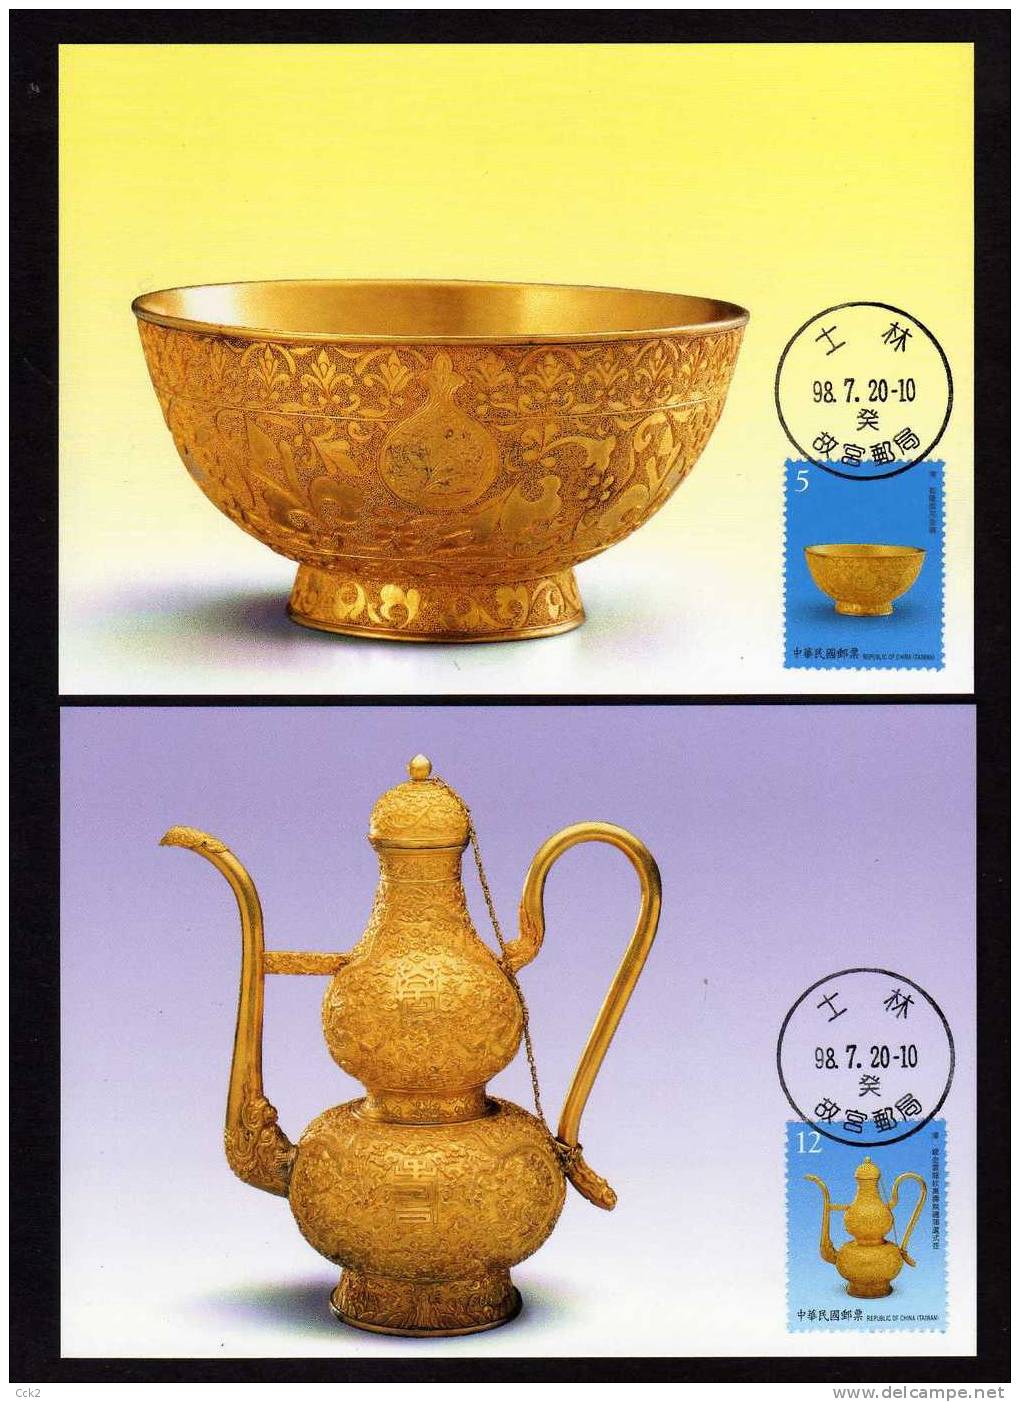 Taiwan (Formosa)- Maximum Cards –Ancient Chinese Art Treasures 2009(4V) - Musées